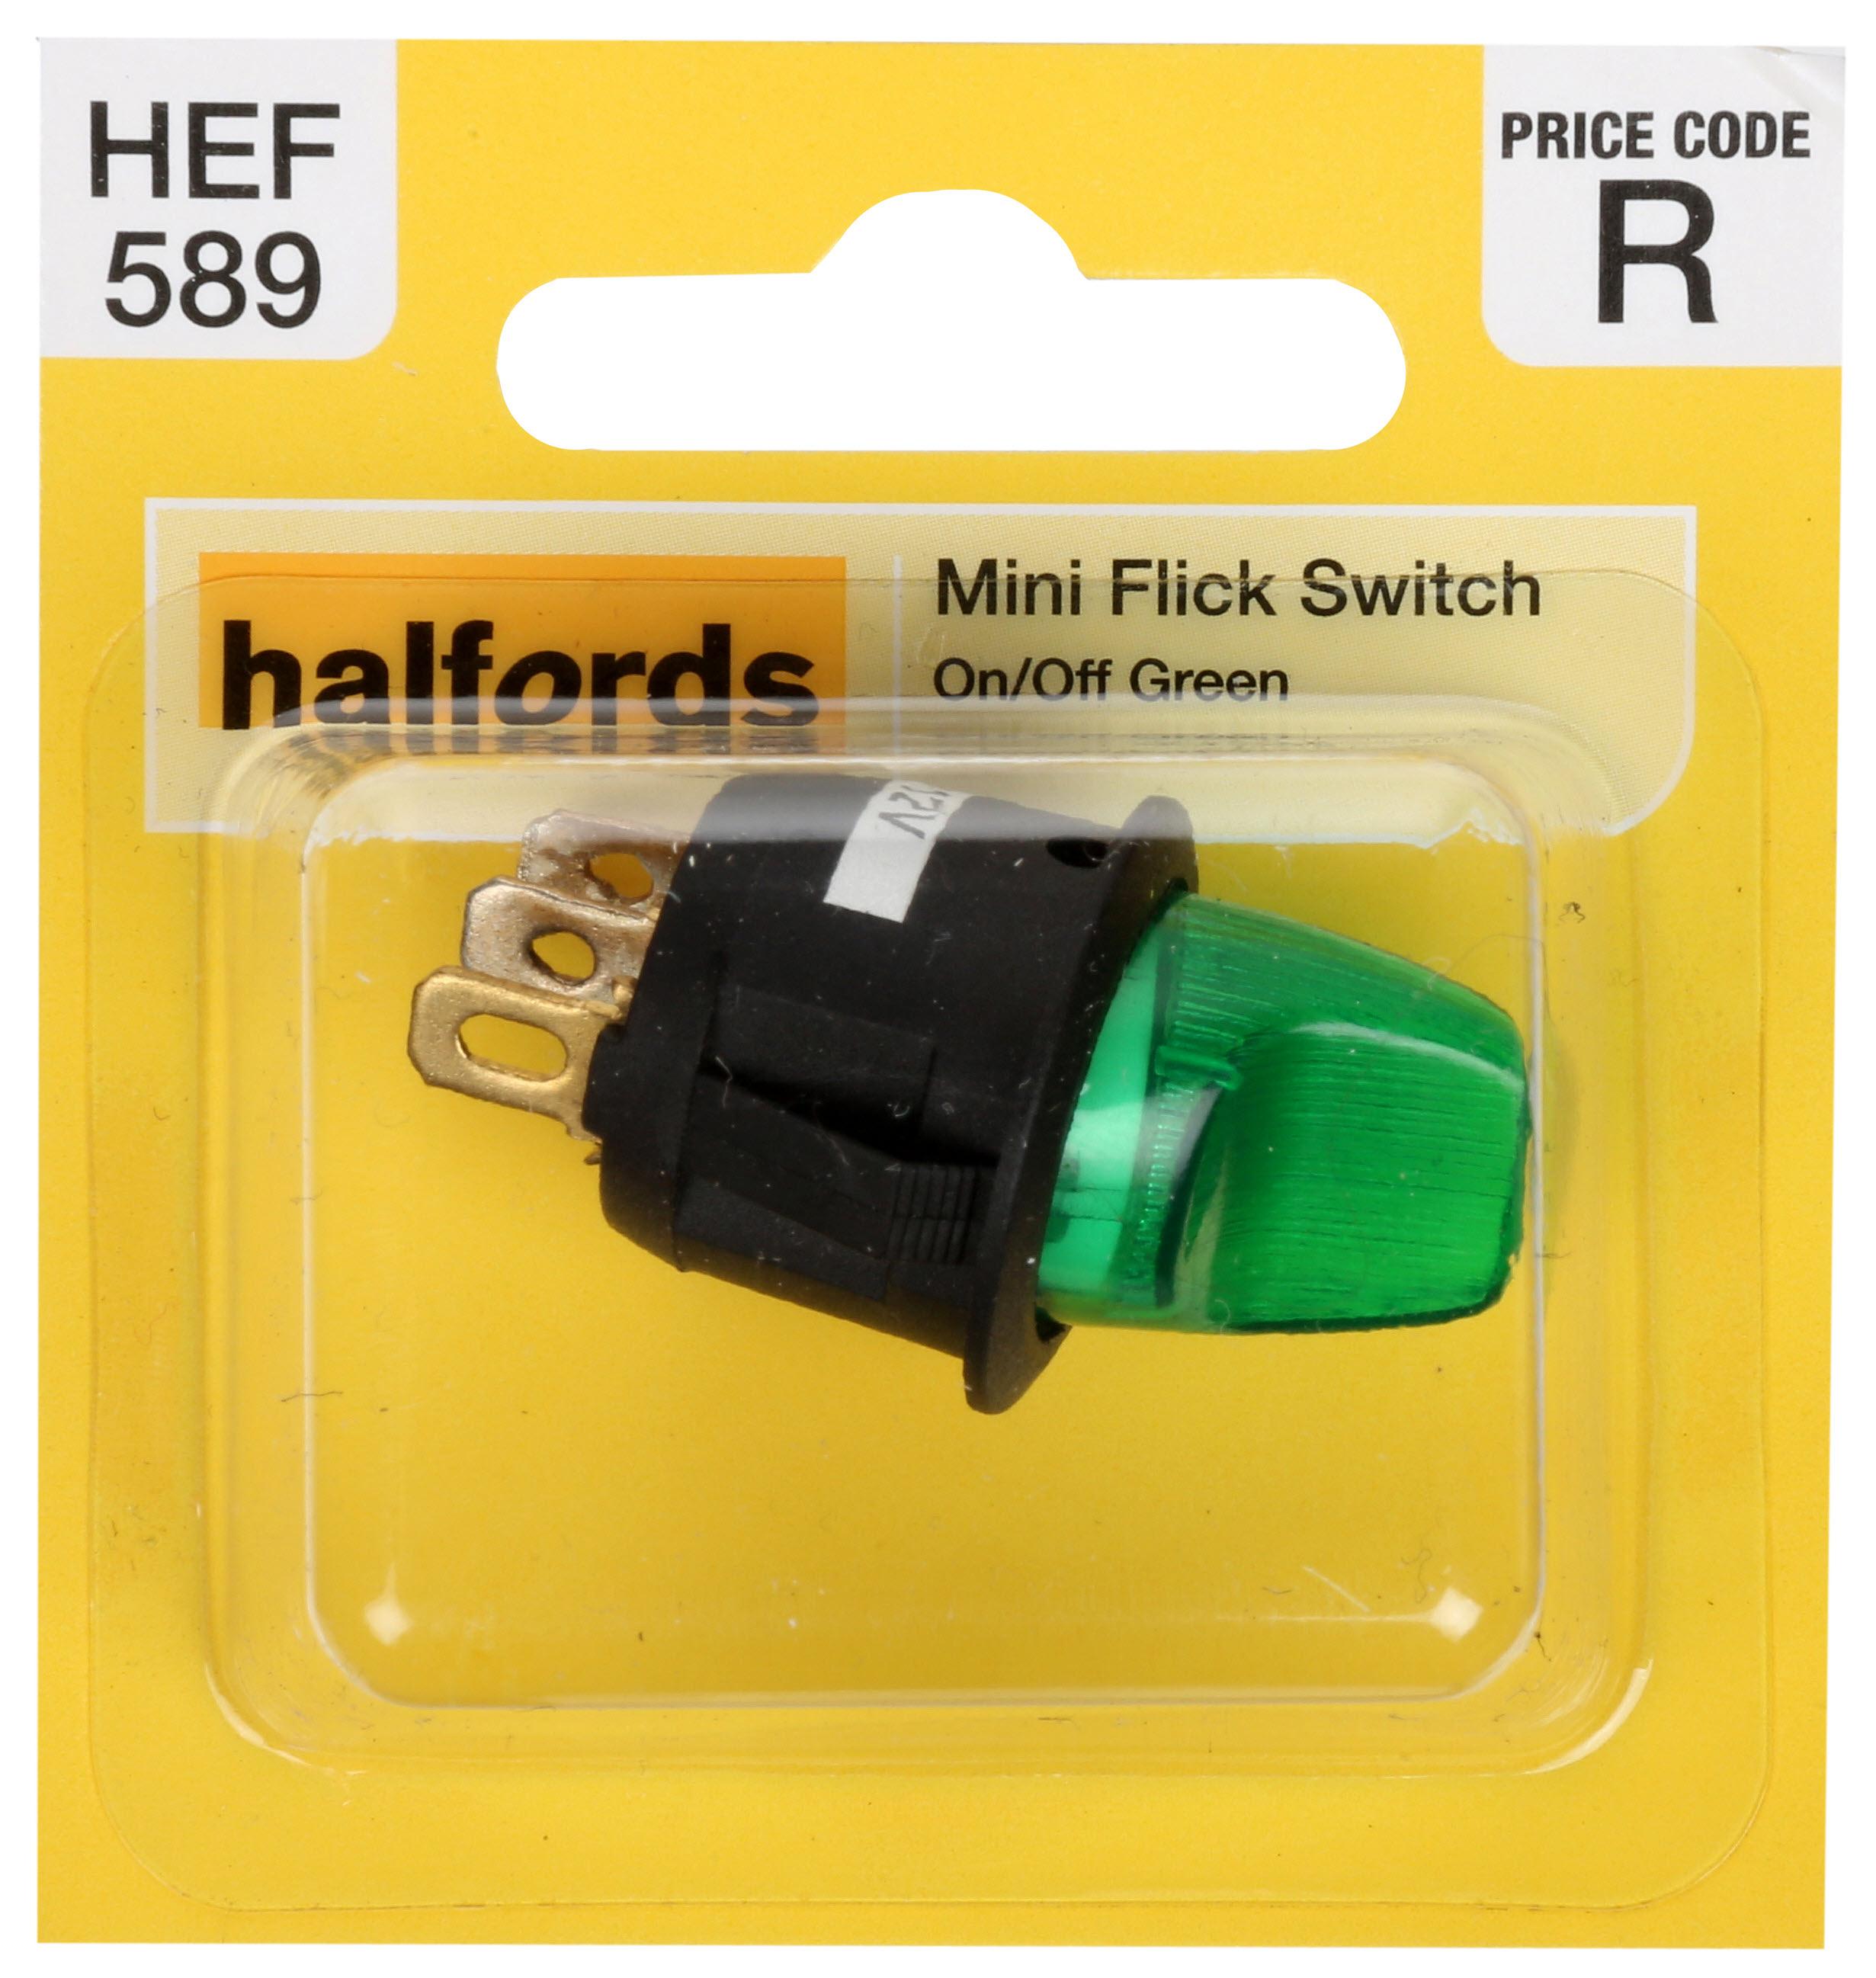 Halfords Mini Flick Switch On/Off Illuminated Green (Hef589)